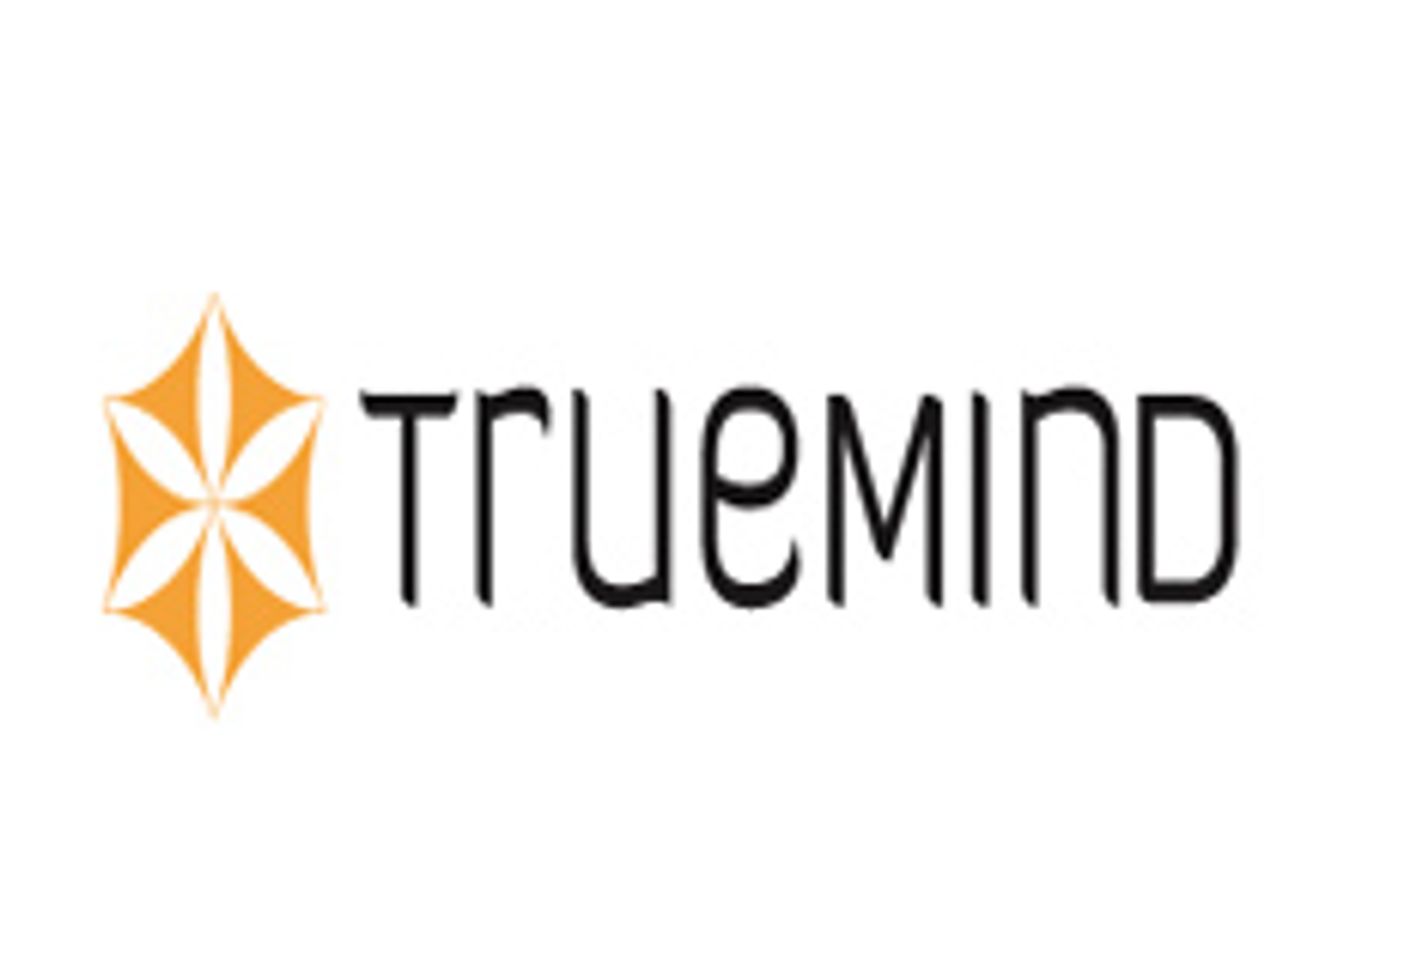 True Mind to Release Lovers’ Guide Series on DVD, Digital Platforms